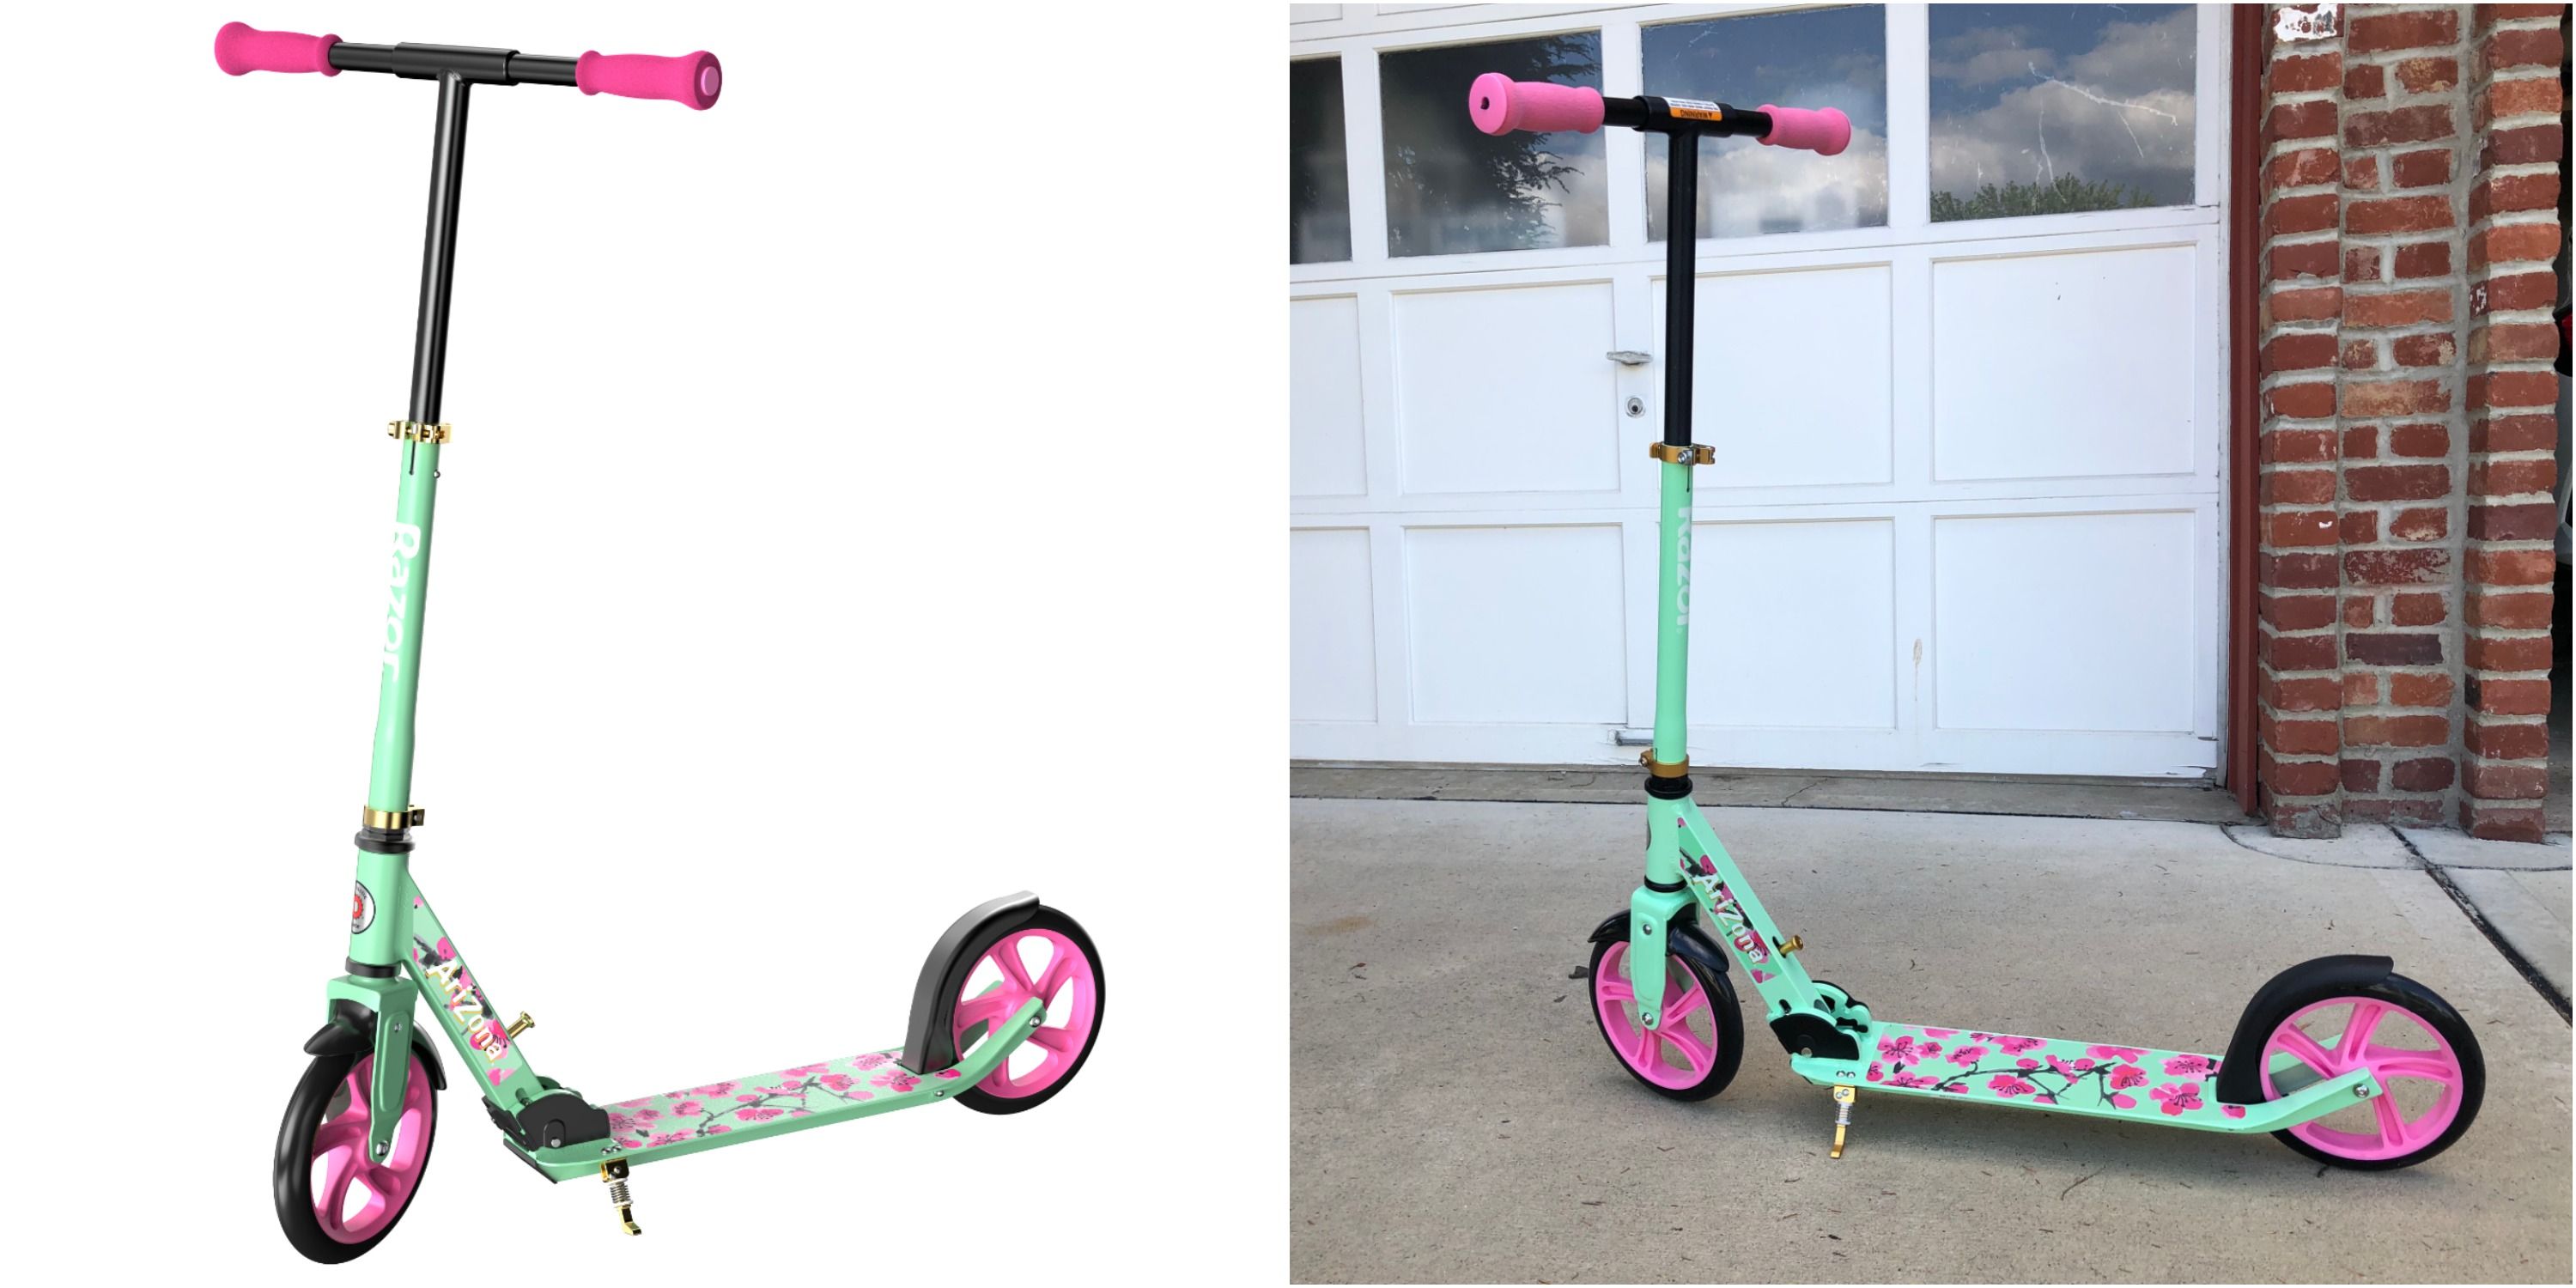 pink razor scooter target